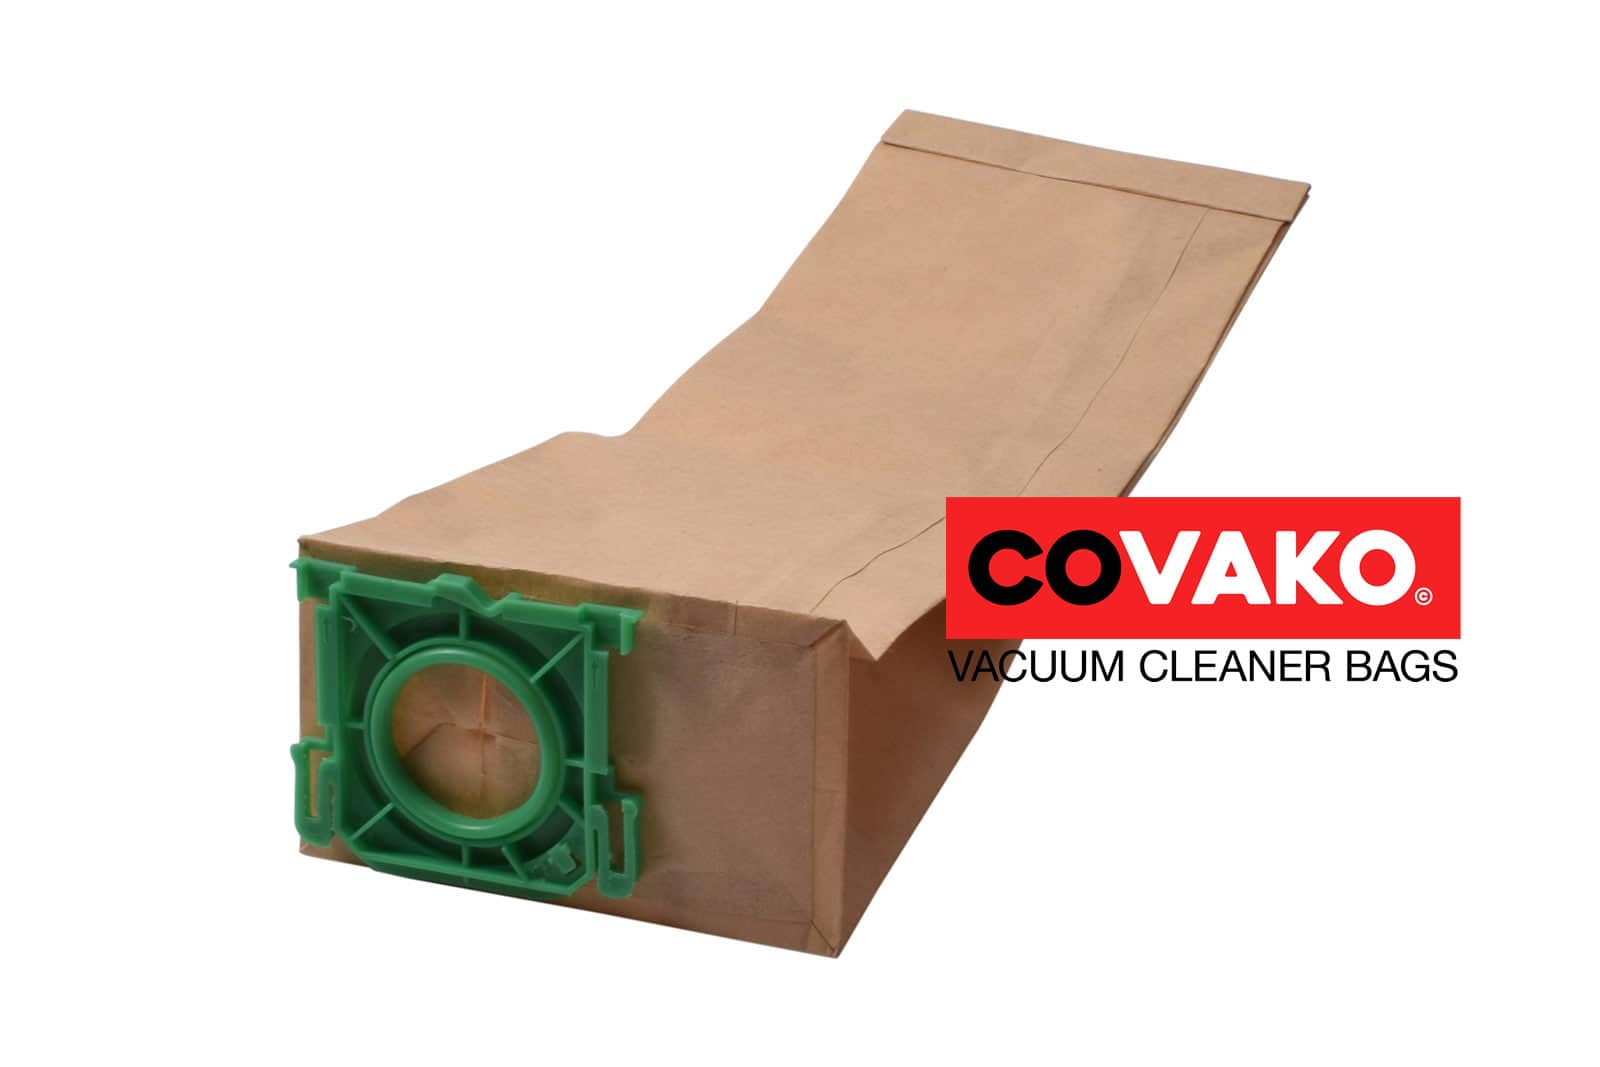 Columbus XP 2 / Paper - Columbus vacuum cleaner bags